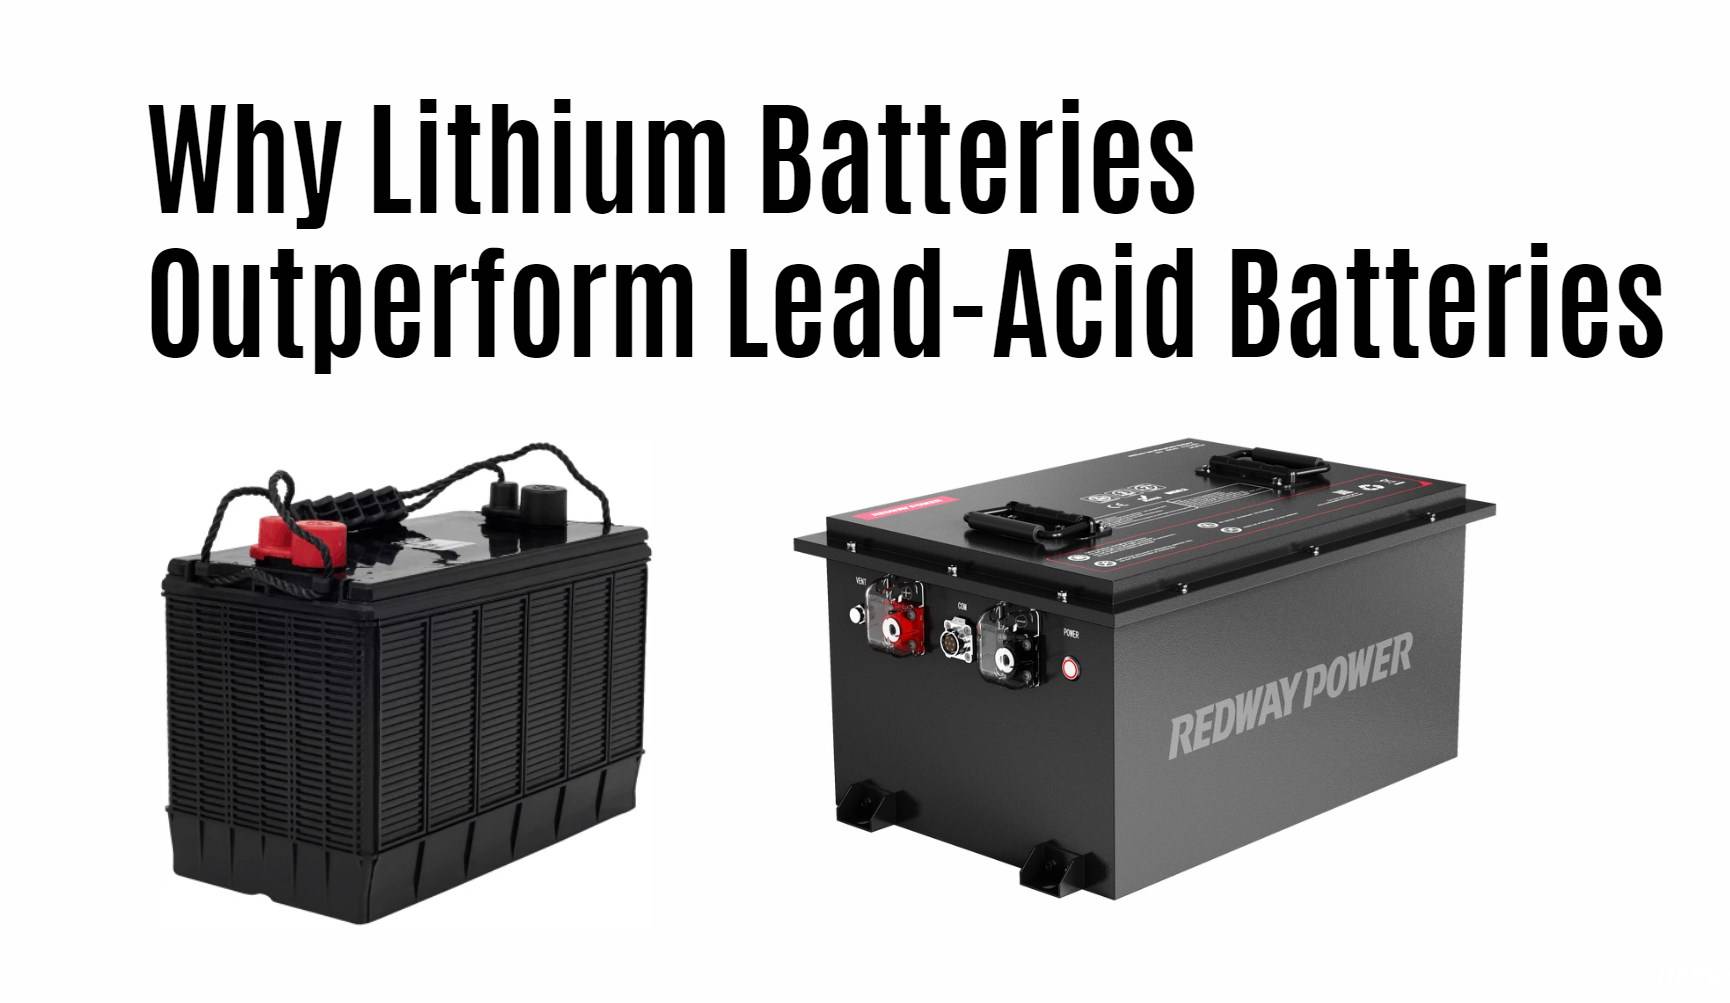 Why Lithium Batteries Outperform Lead-Acid Batteries